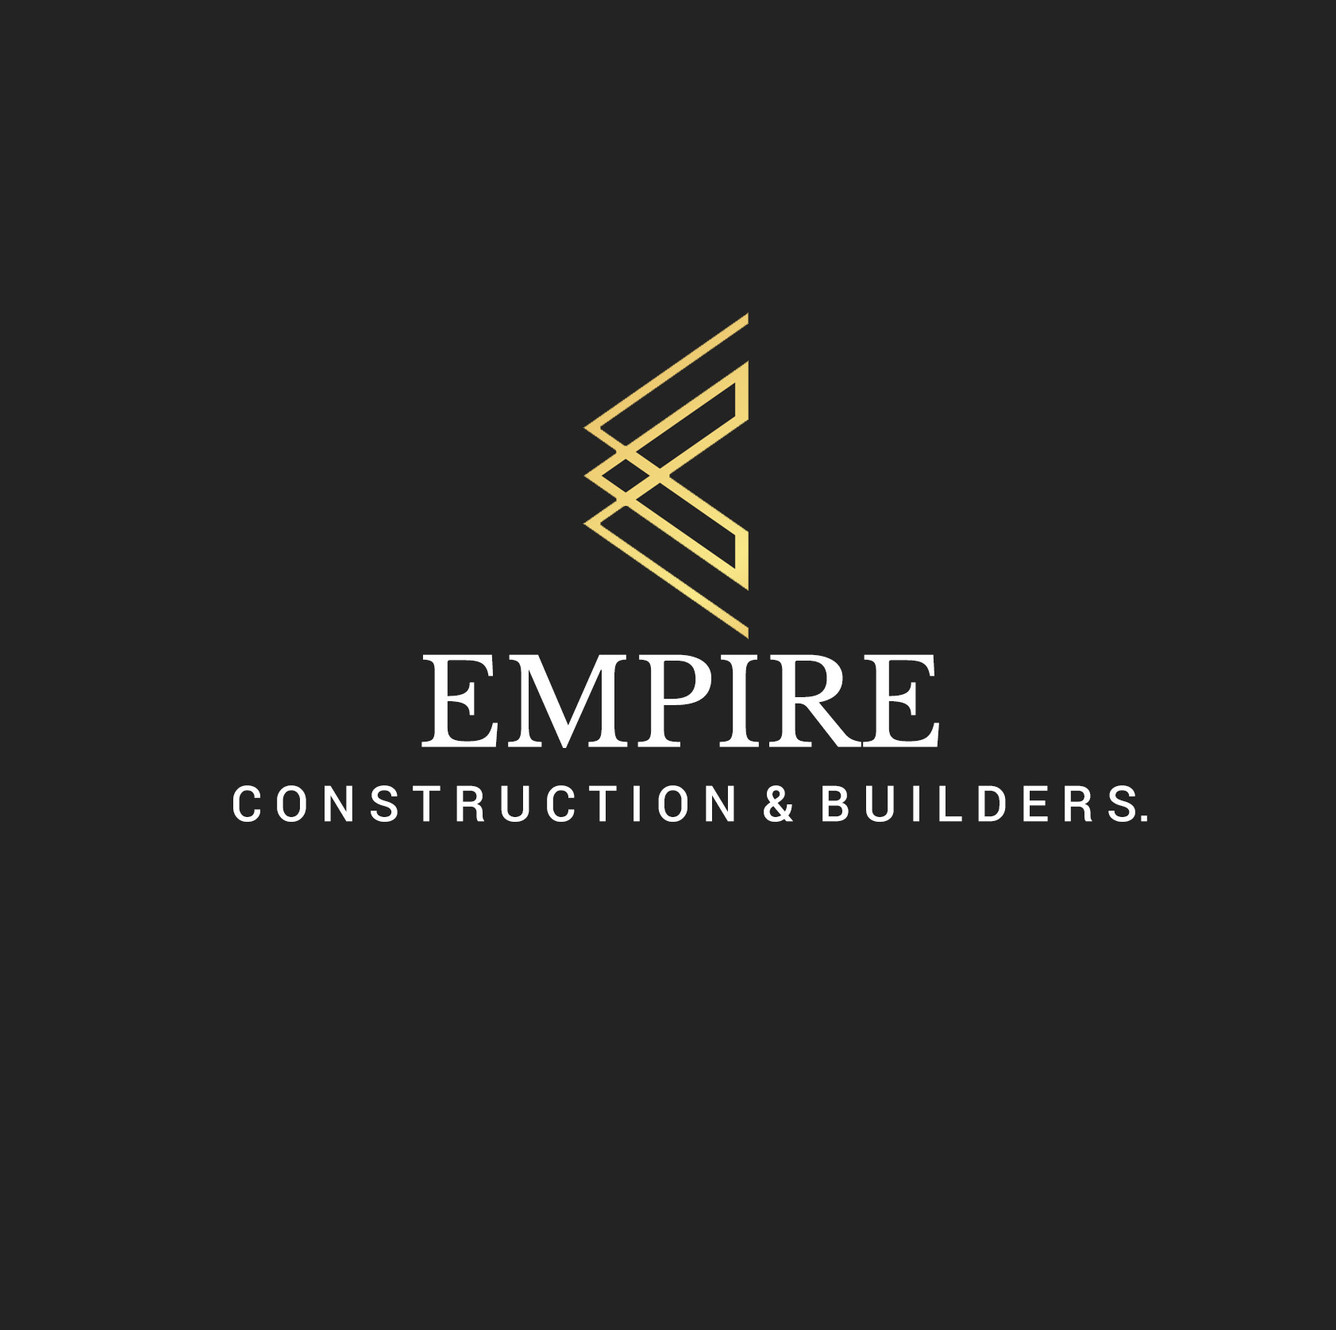 Empire construction